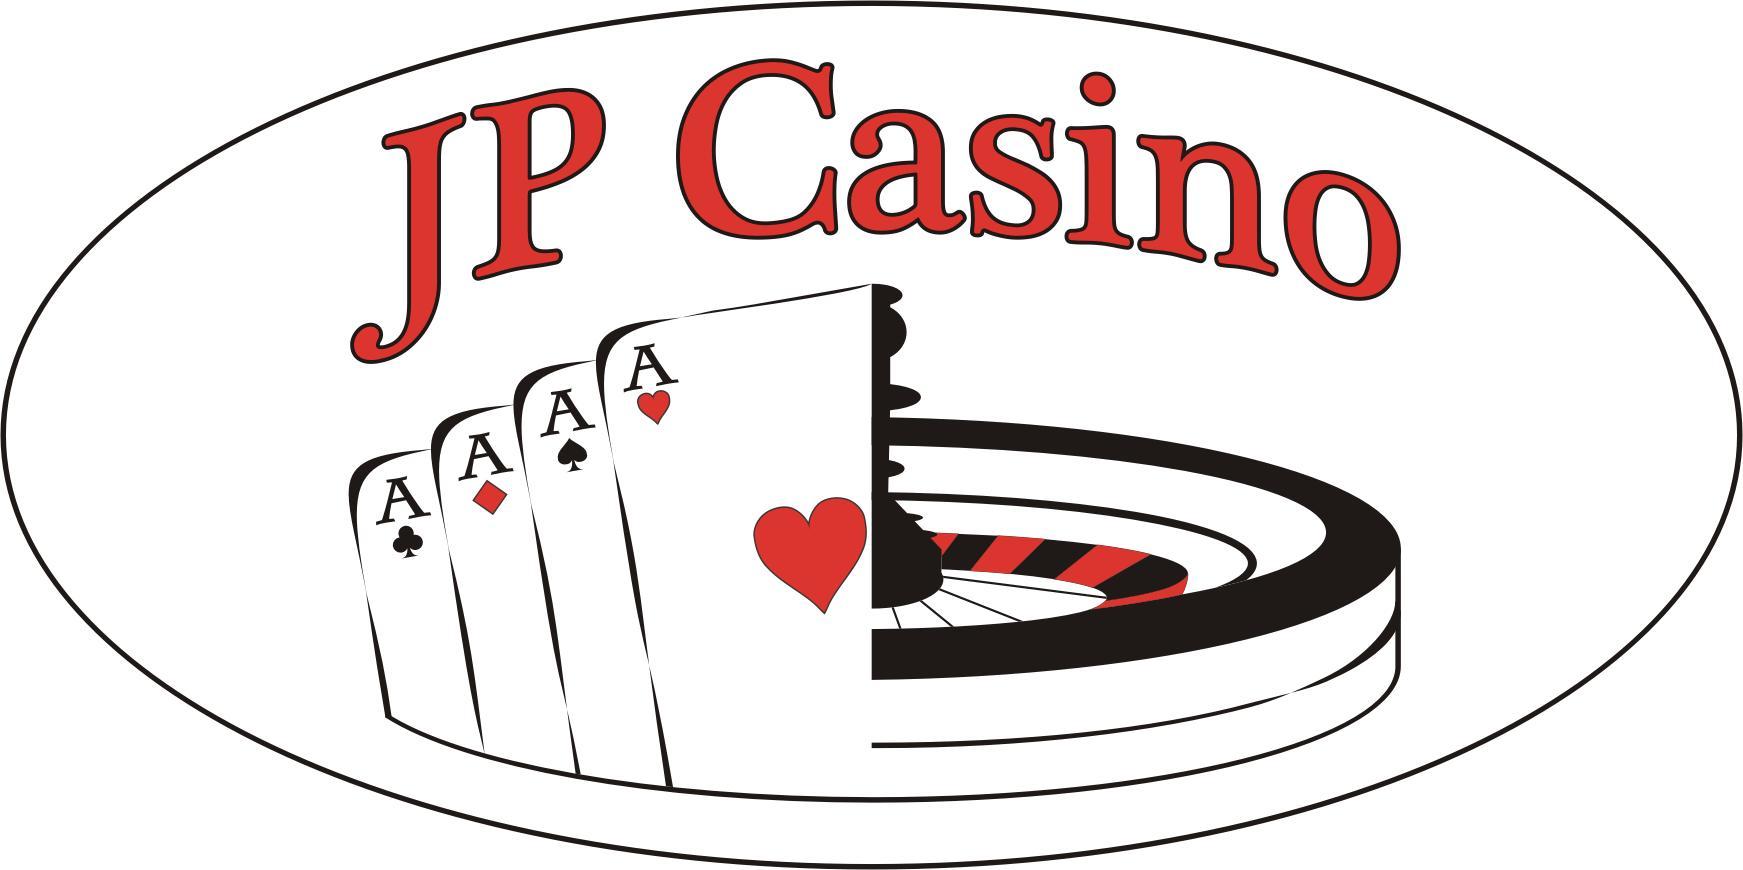 JP Casino logo